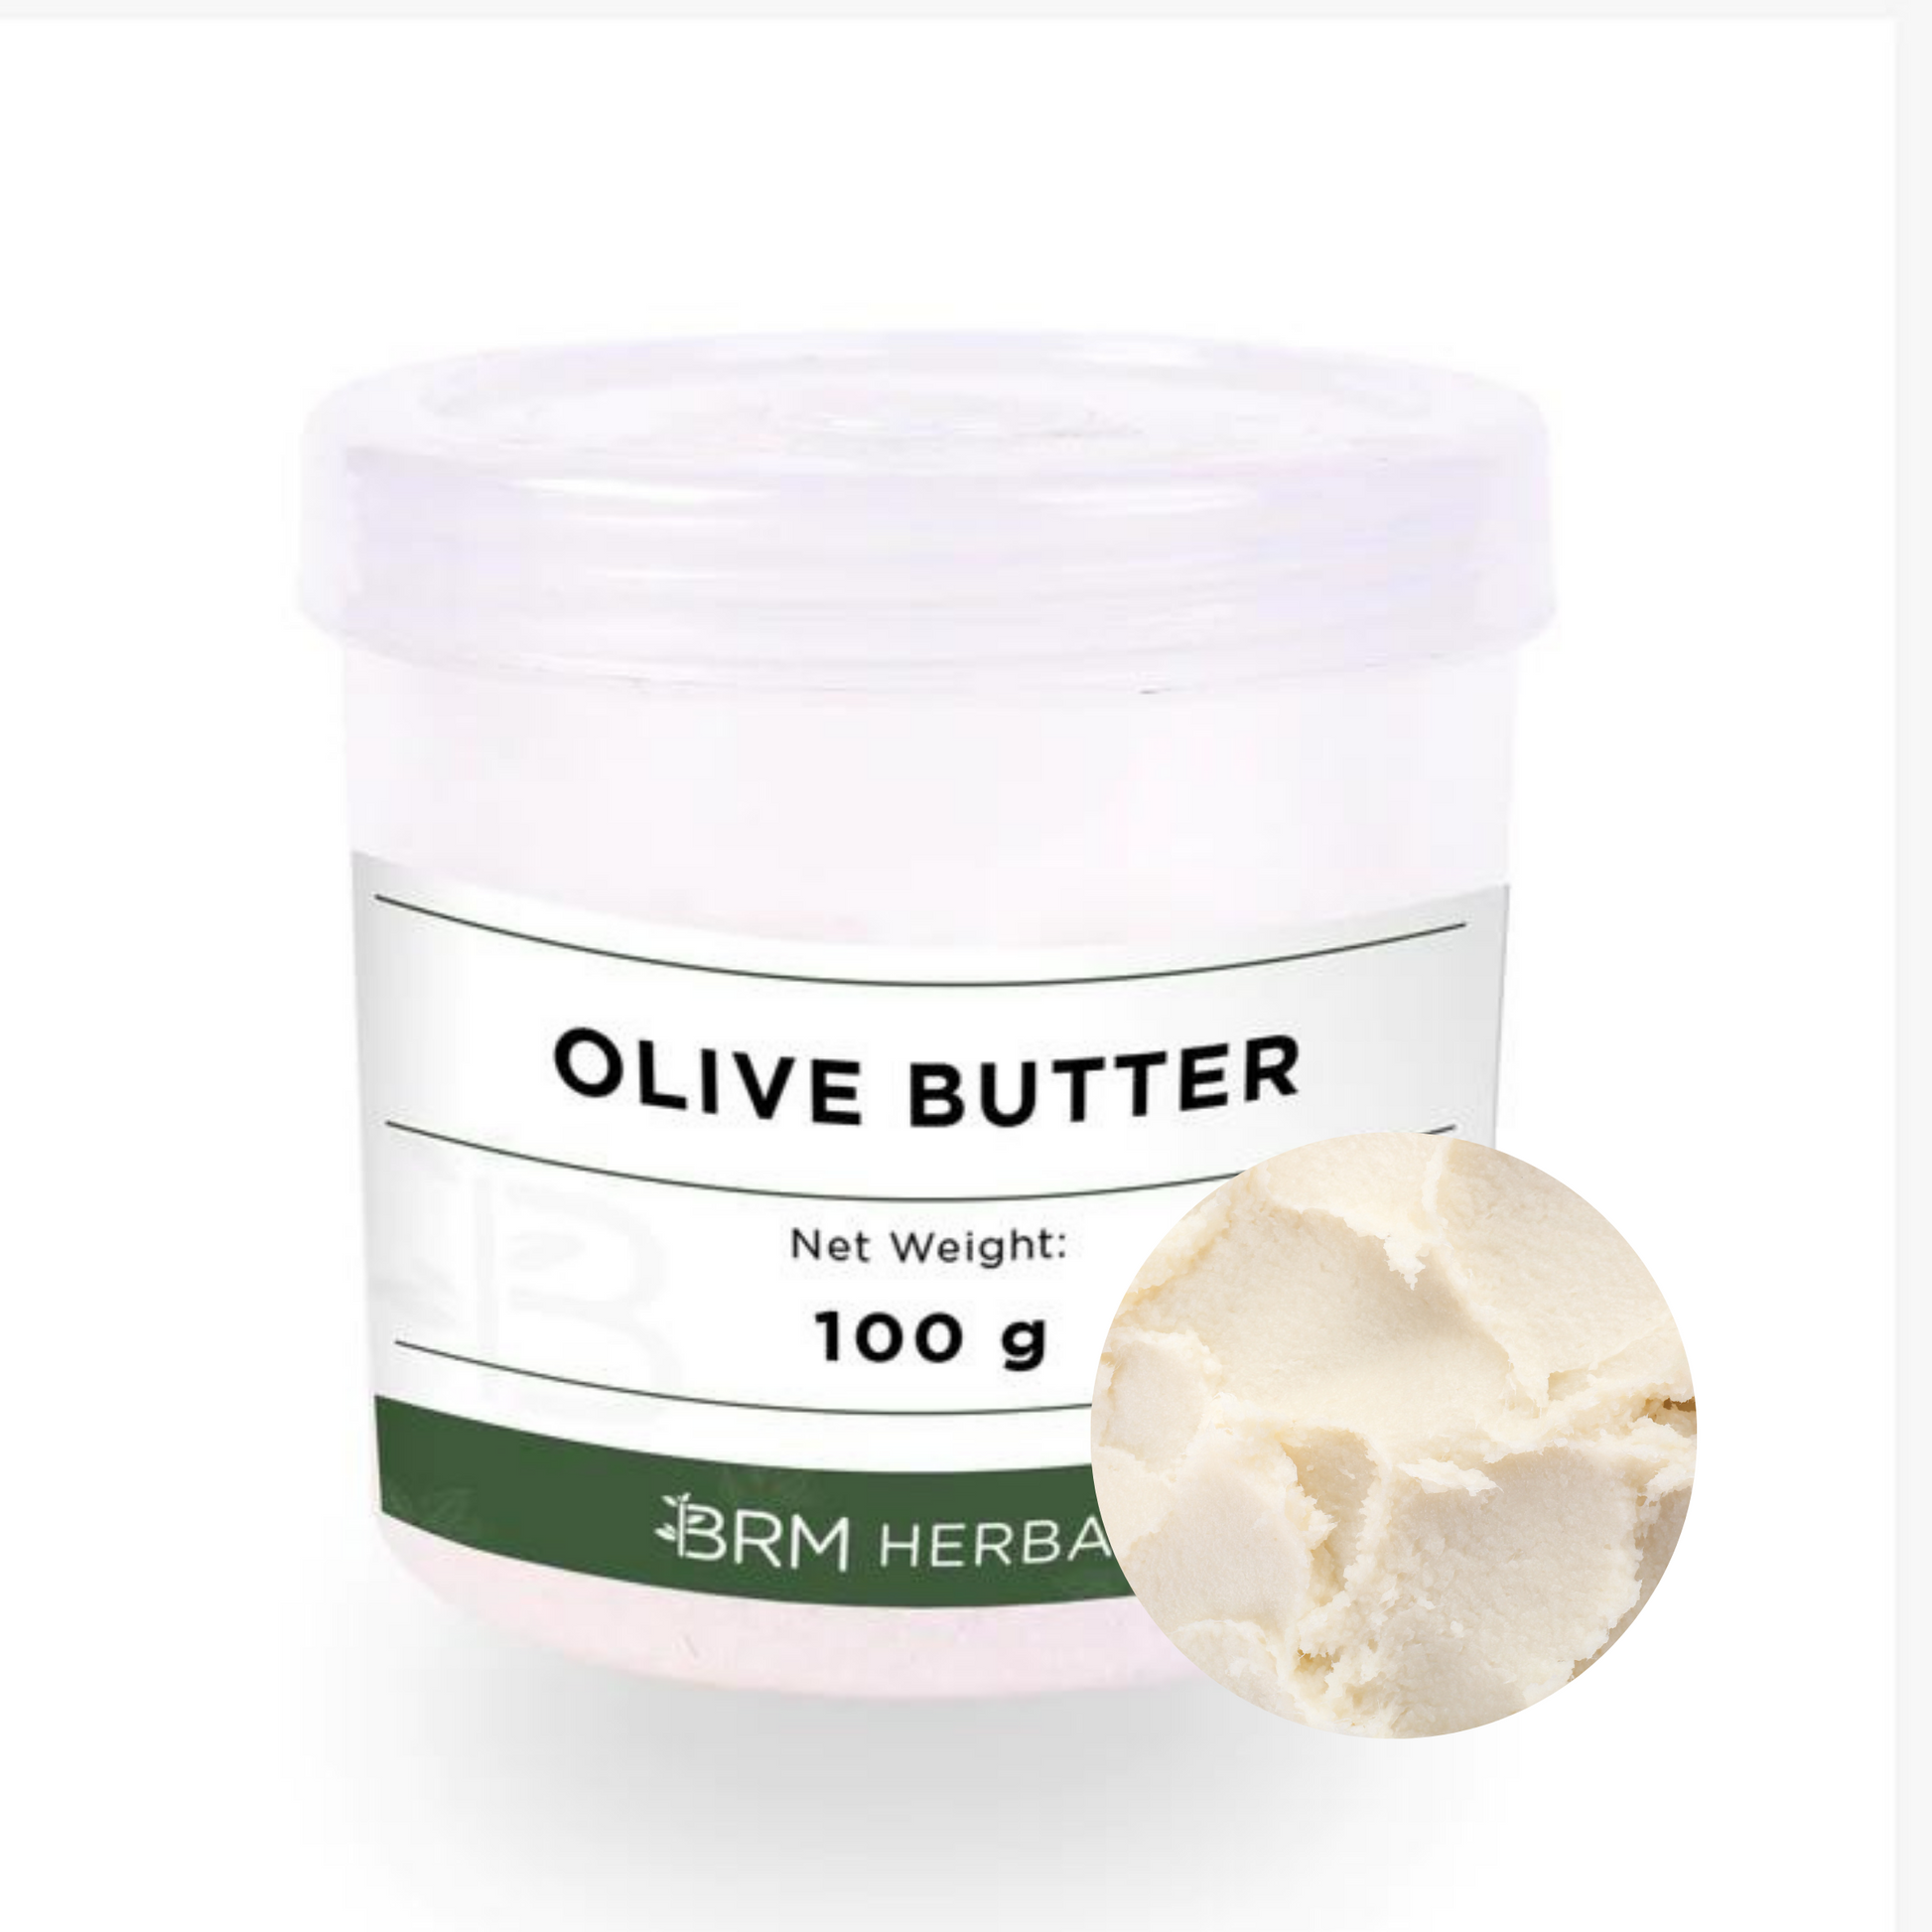 Buy BRM Herbals Avocado Butter Refined - 500 Grams Avocado Butter